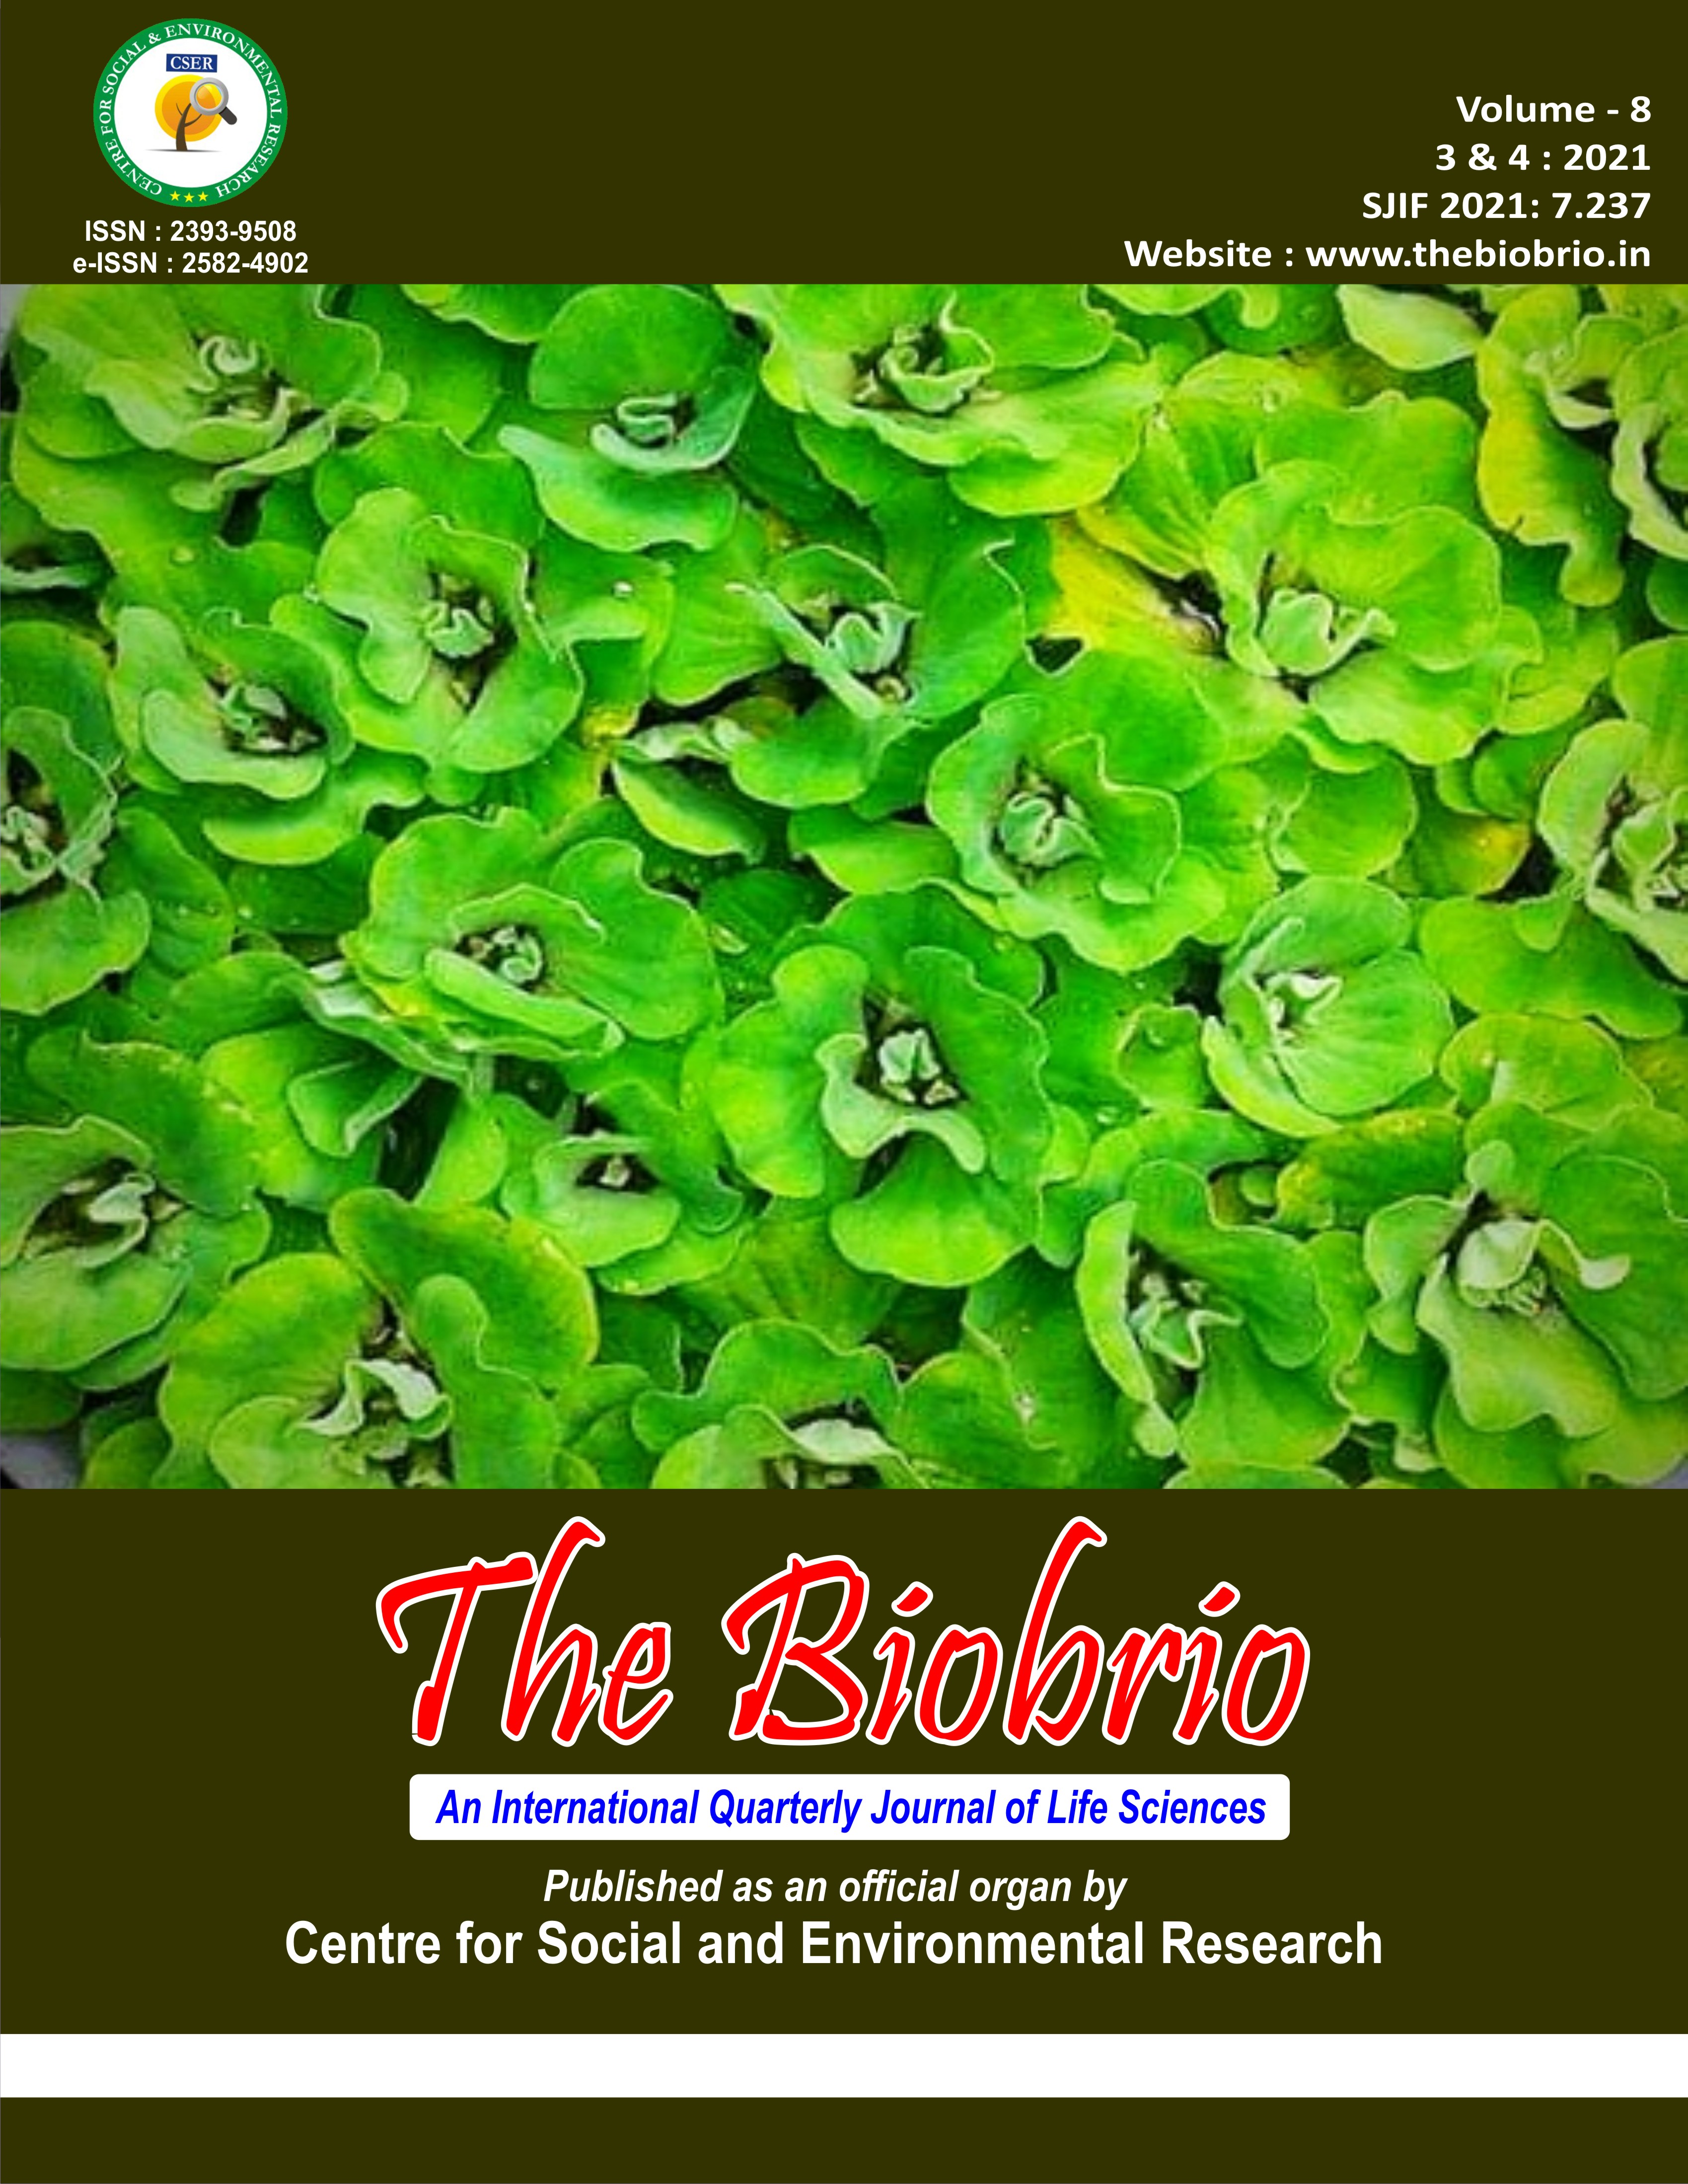 The BioBrio publication